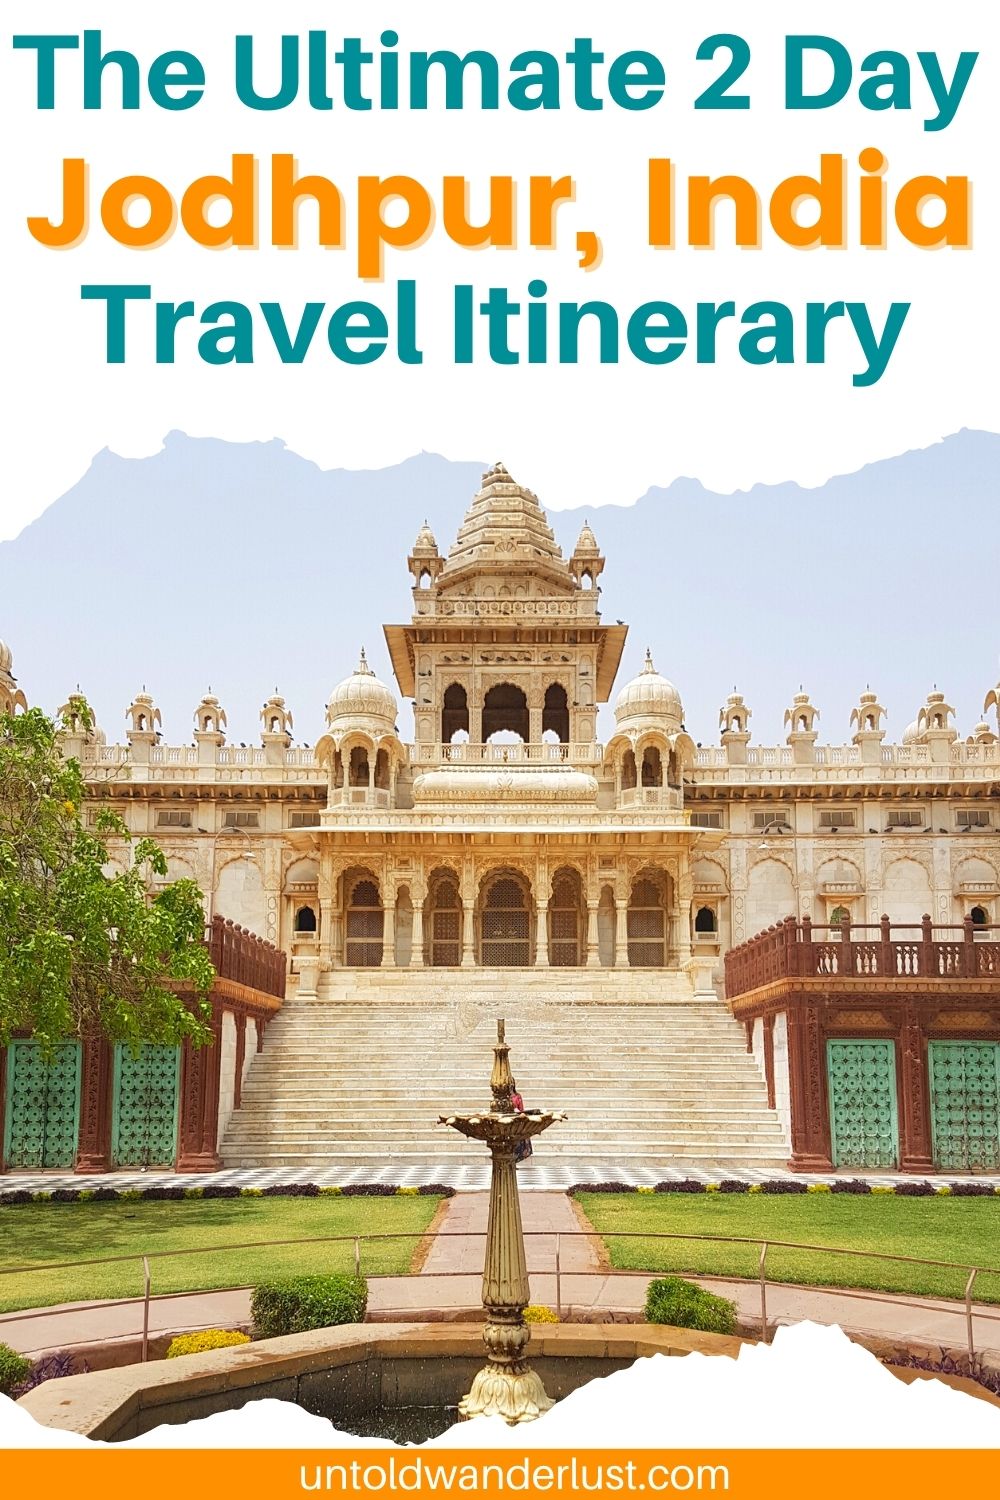 The Ultimate 2-Day Jodhpur, India Travel Itinerary